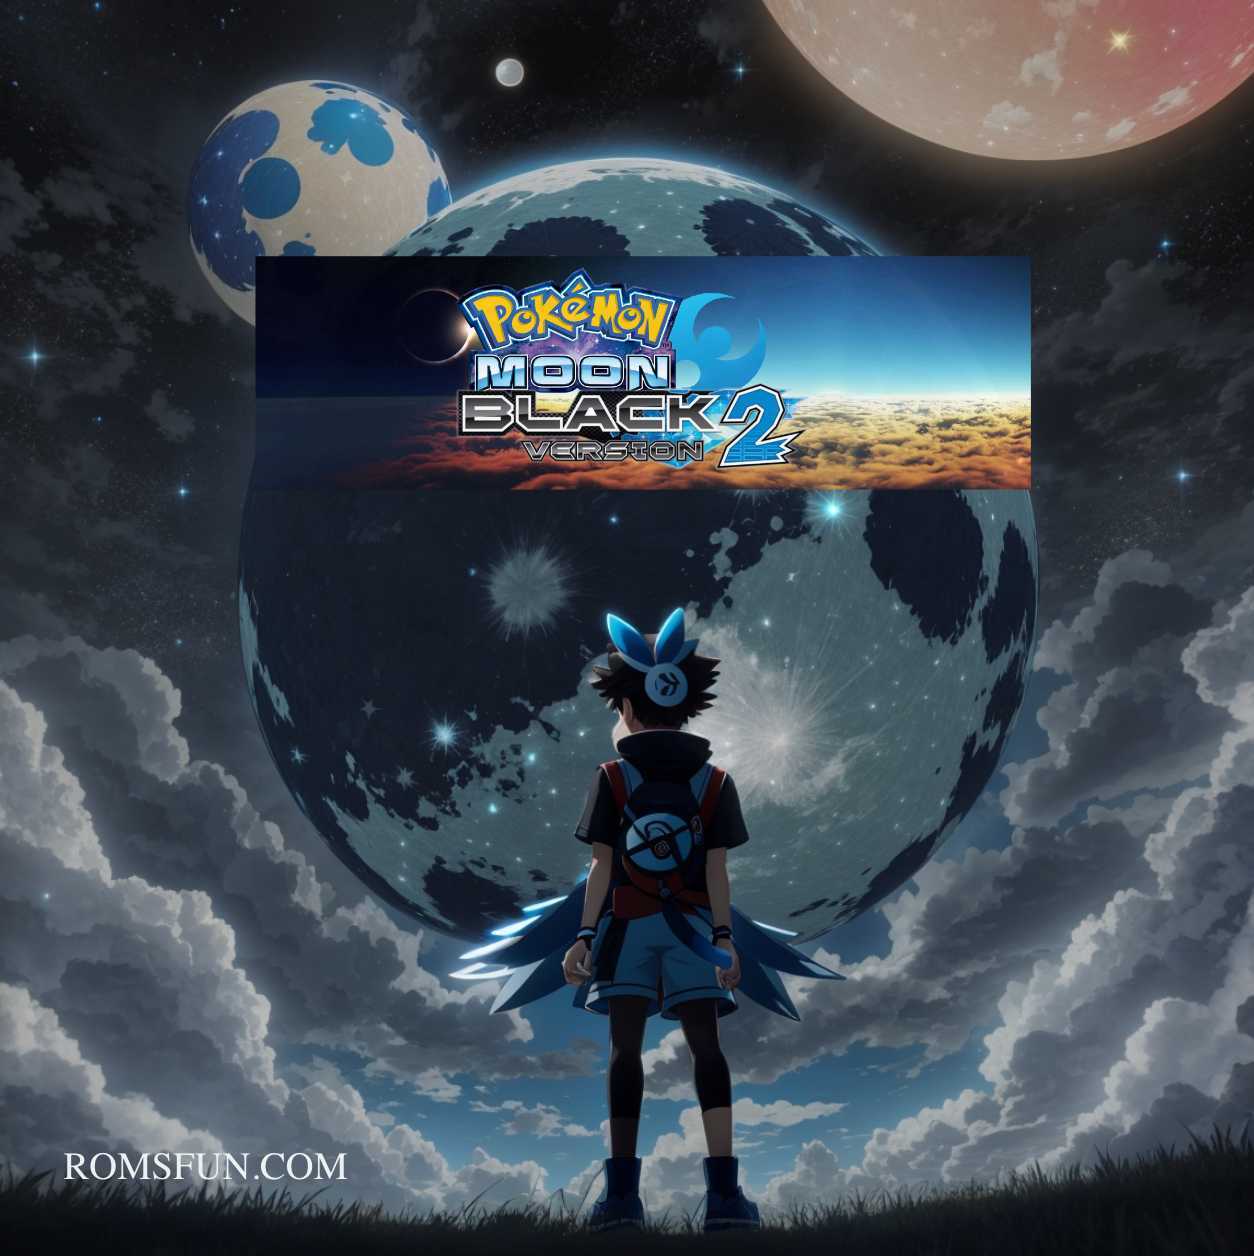 Pokemon Moon Black 2 Cheats